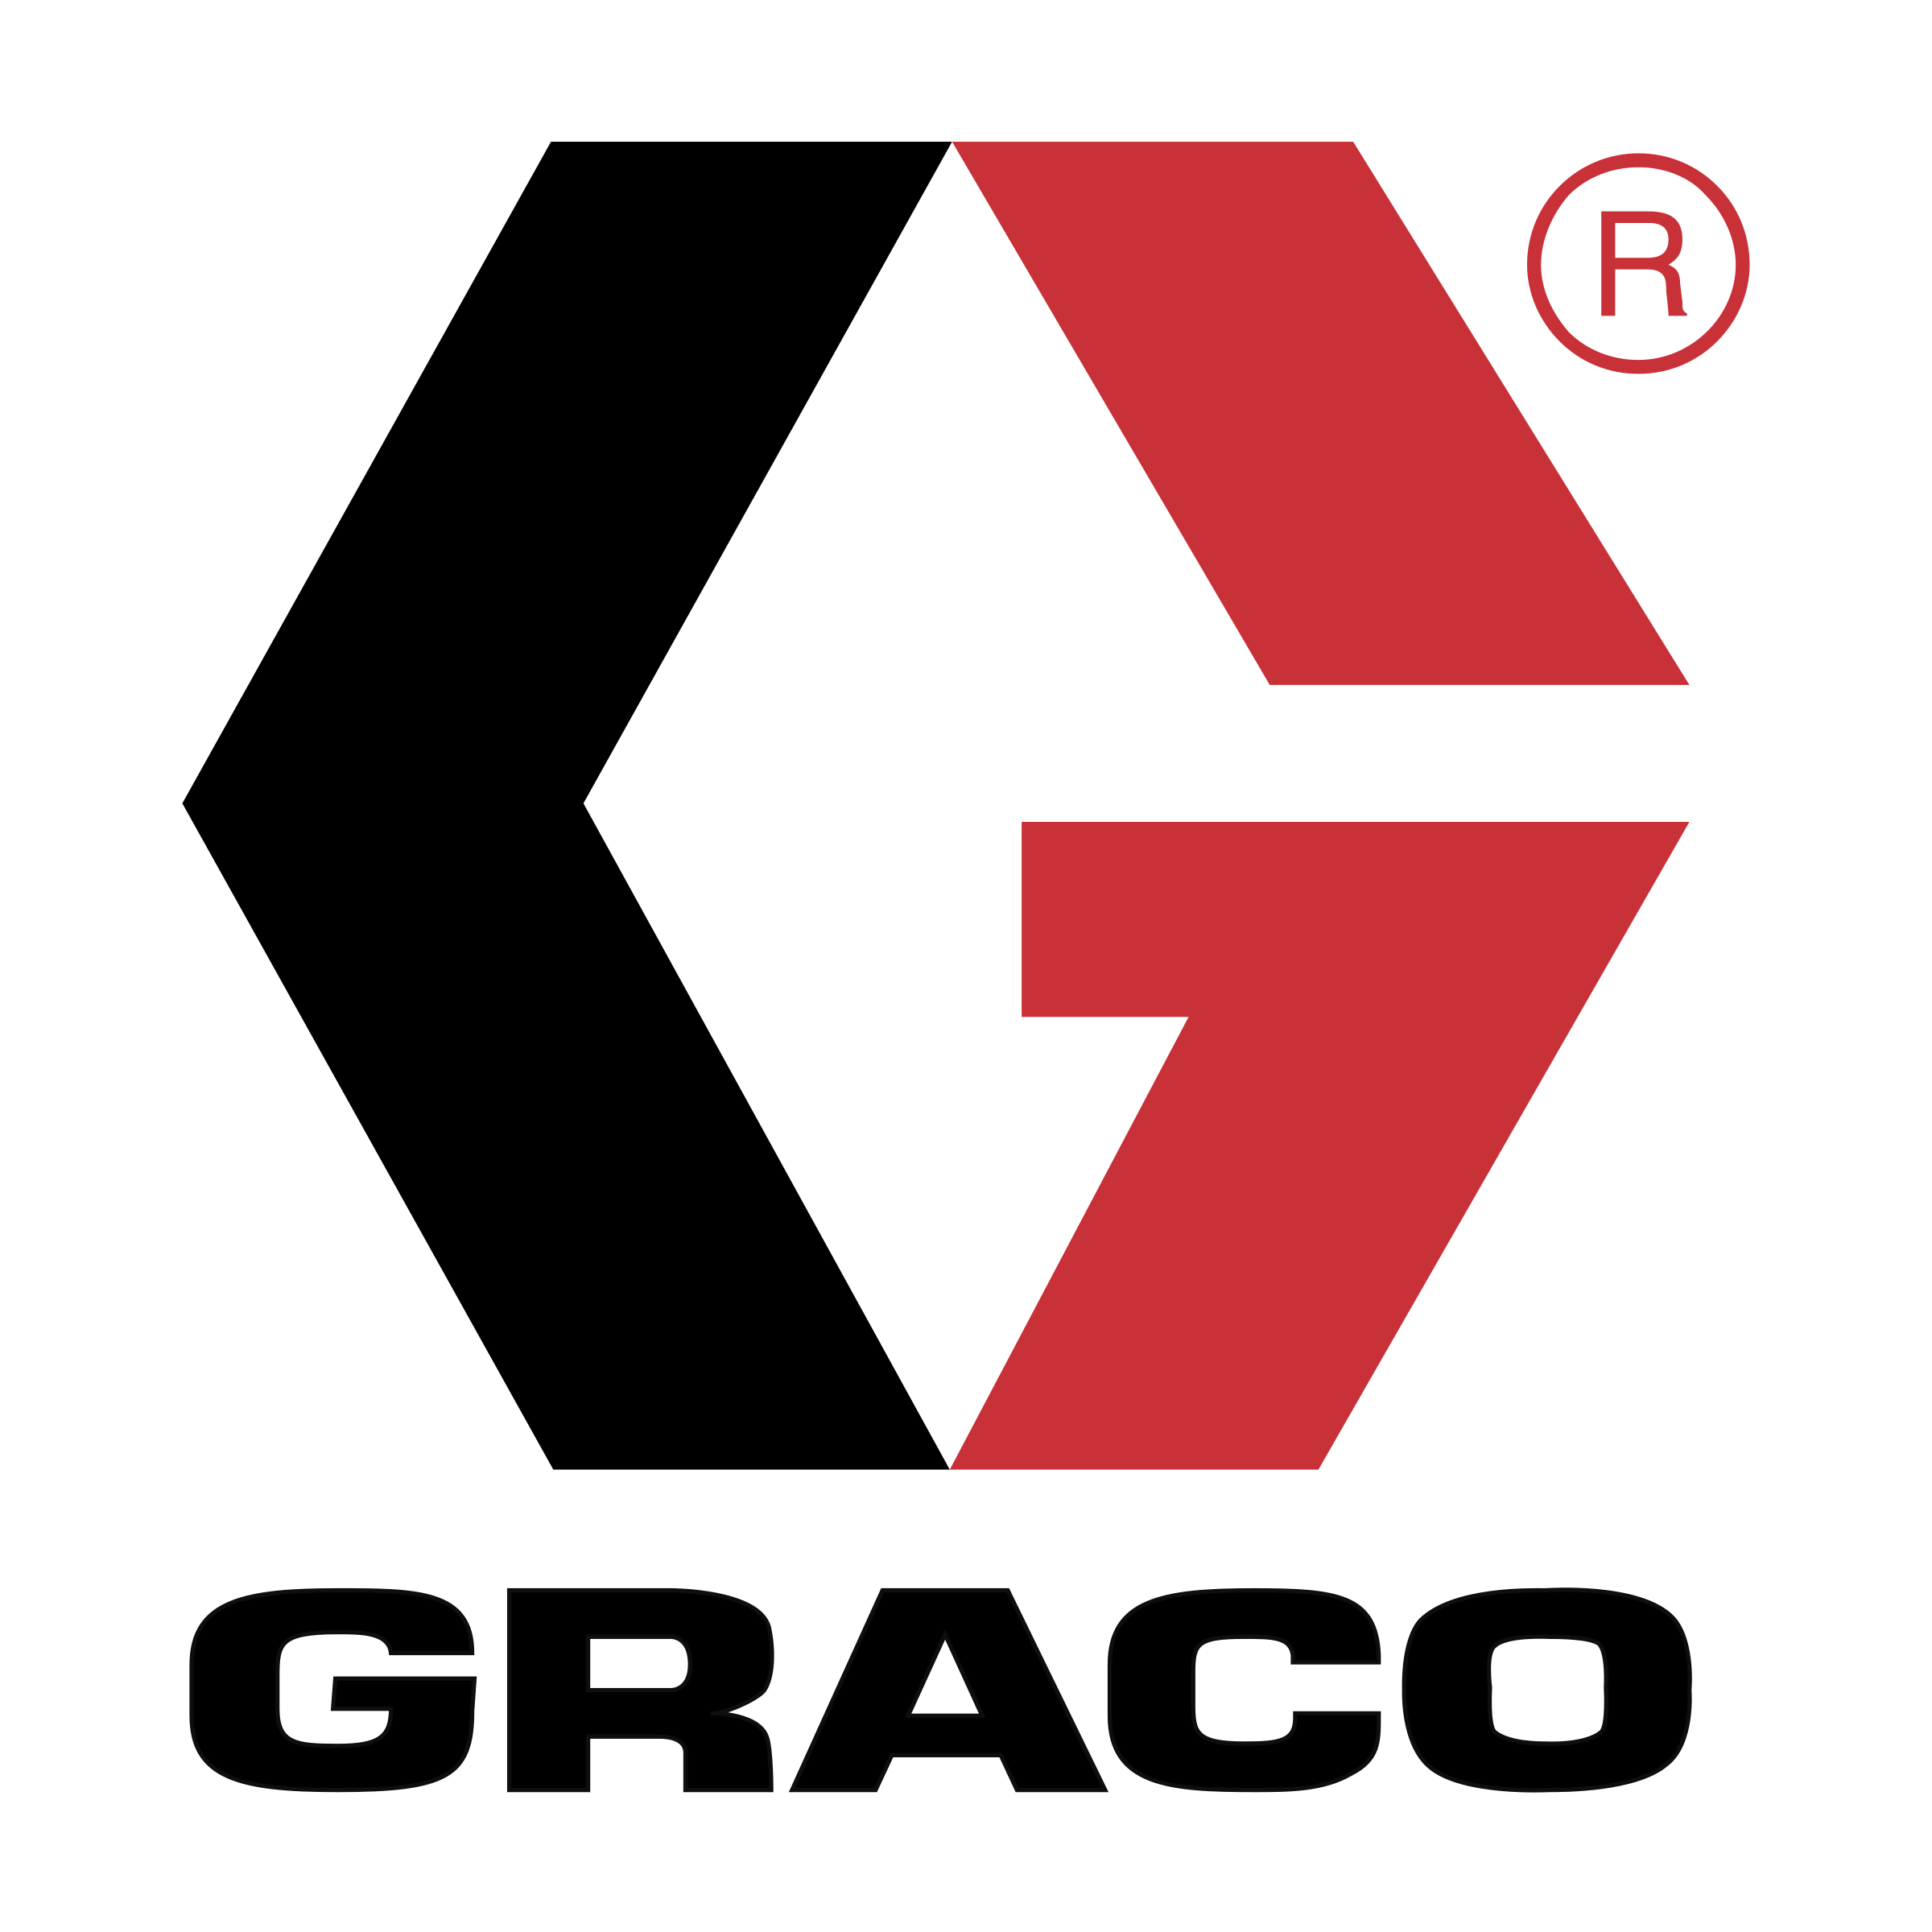 Graco Logo - Graco Logo PNG Transparent & SVG Vector - Freebie Supply